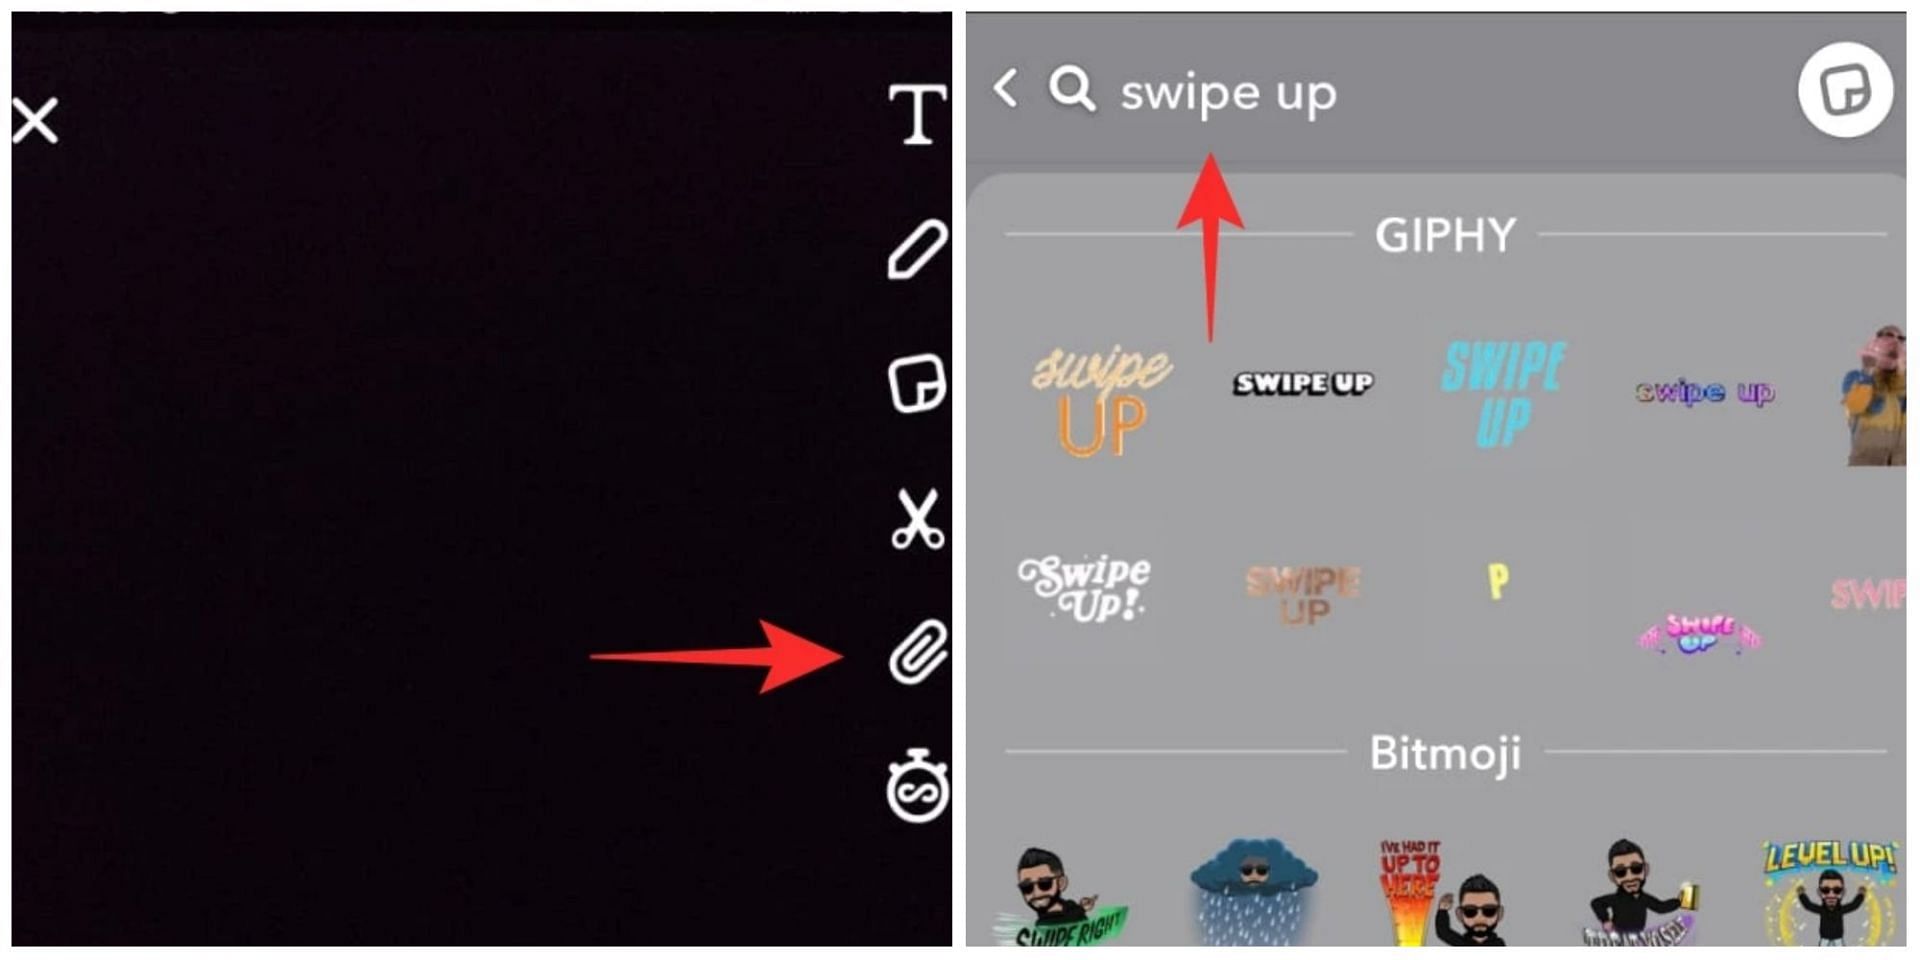 How to create a swipe up link on snapchat explored. (Image via Sportskeeda)